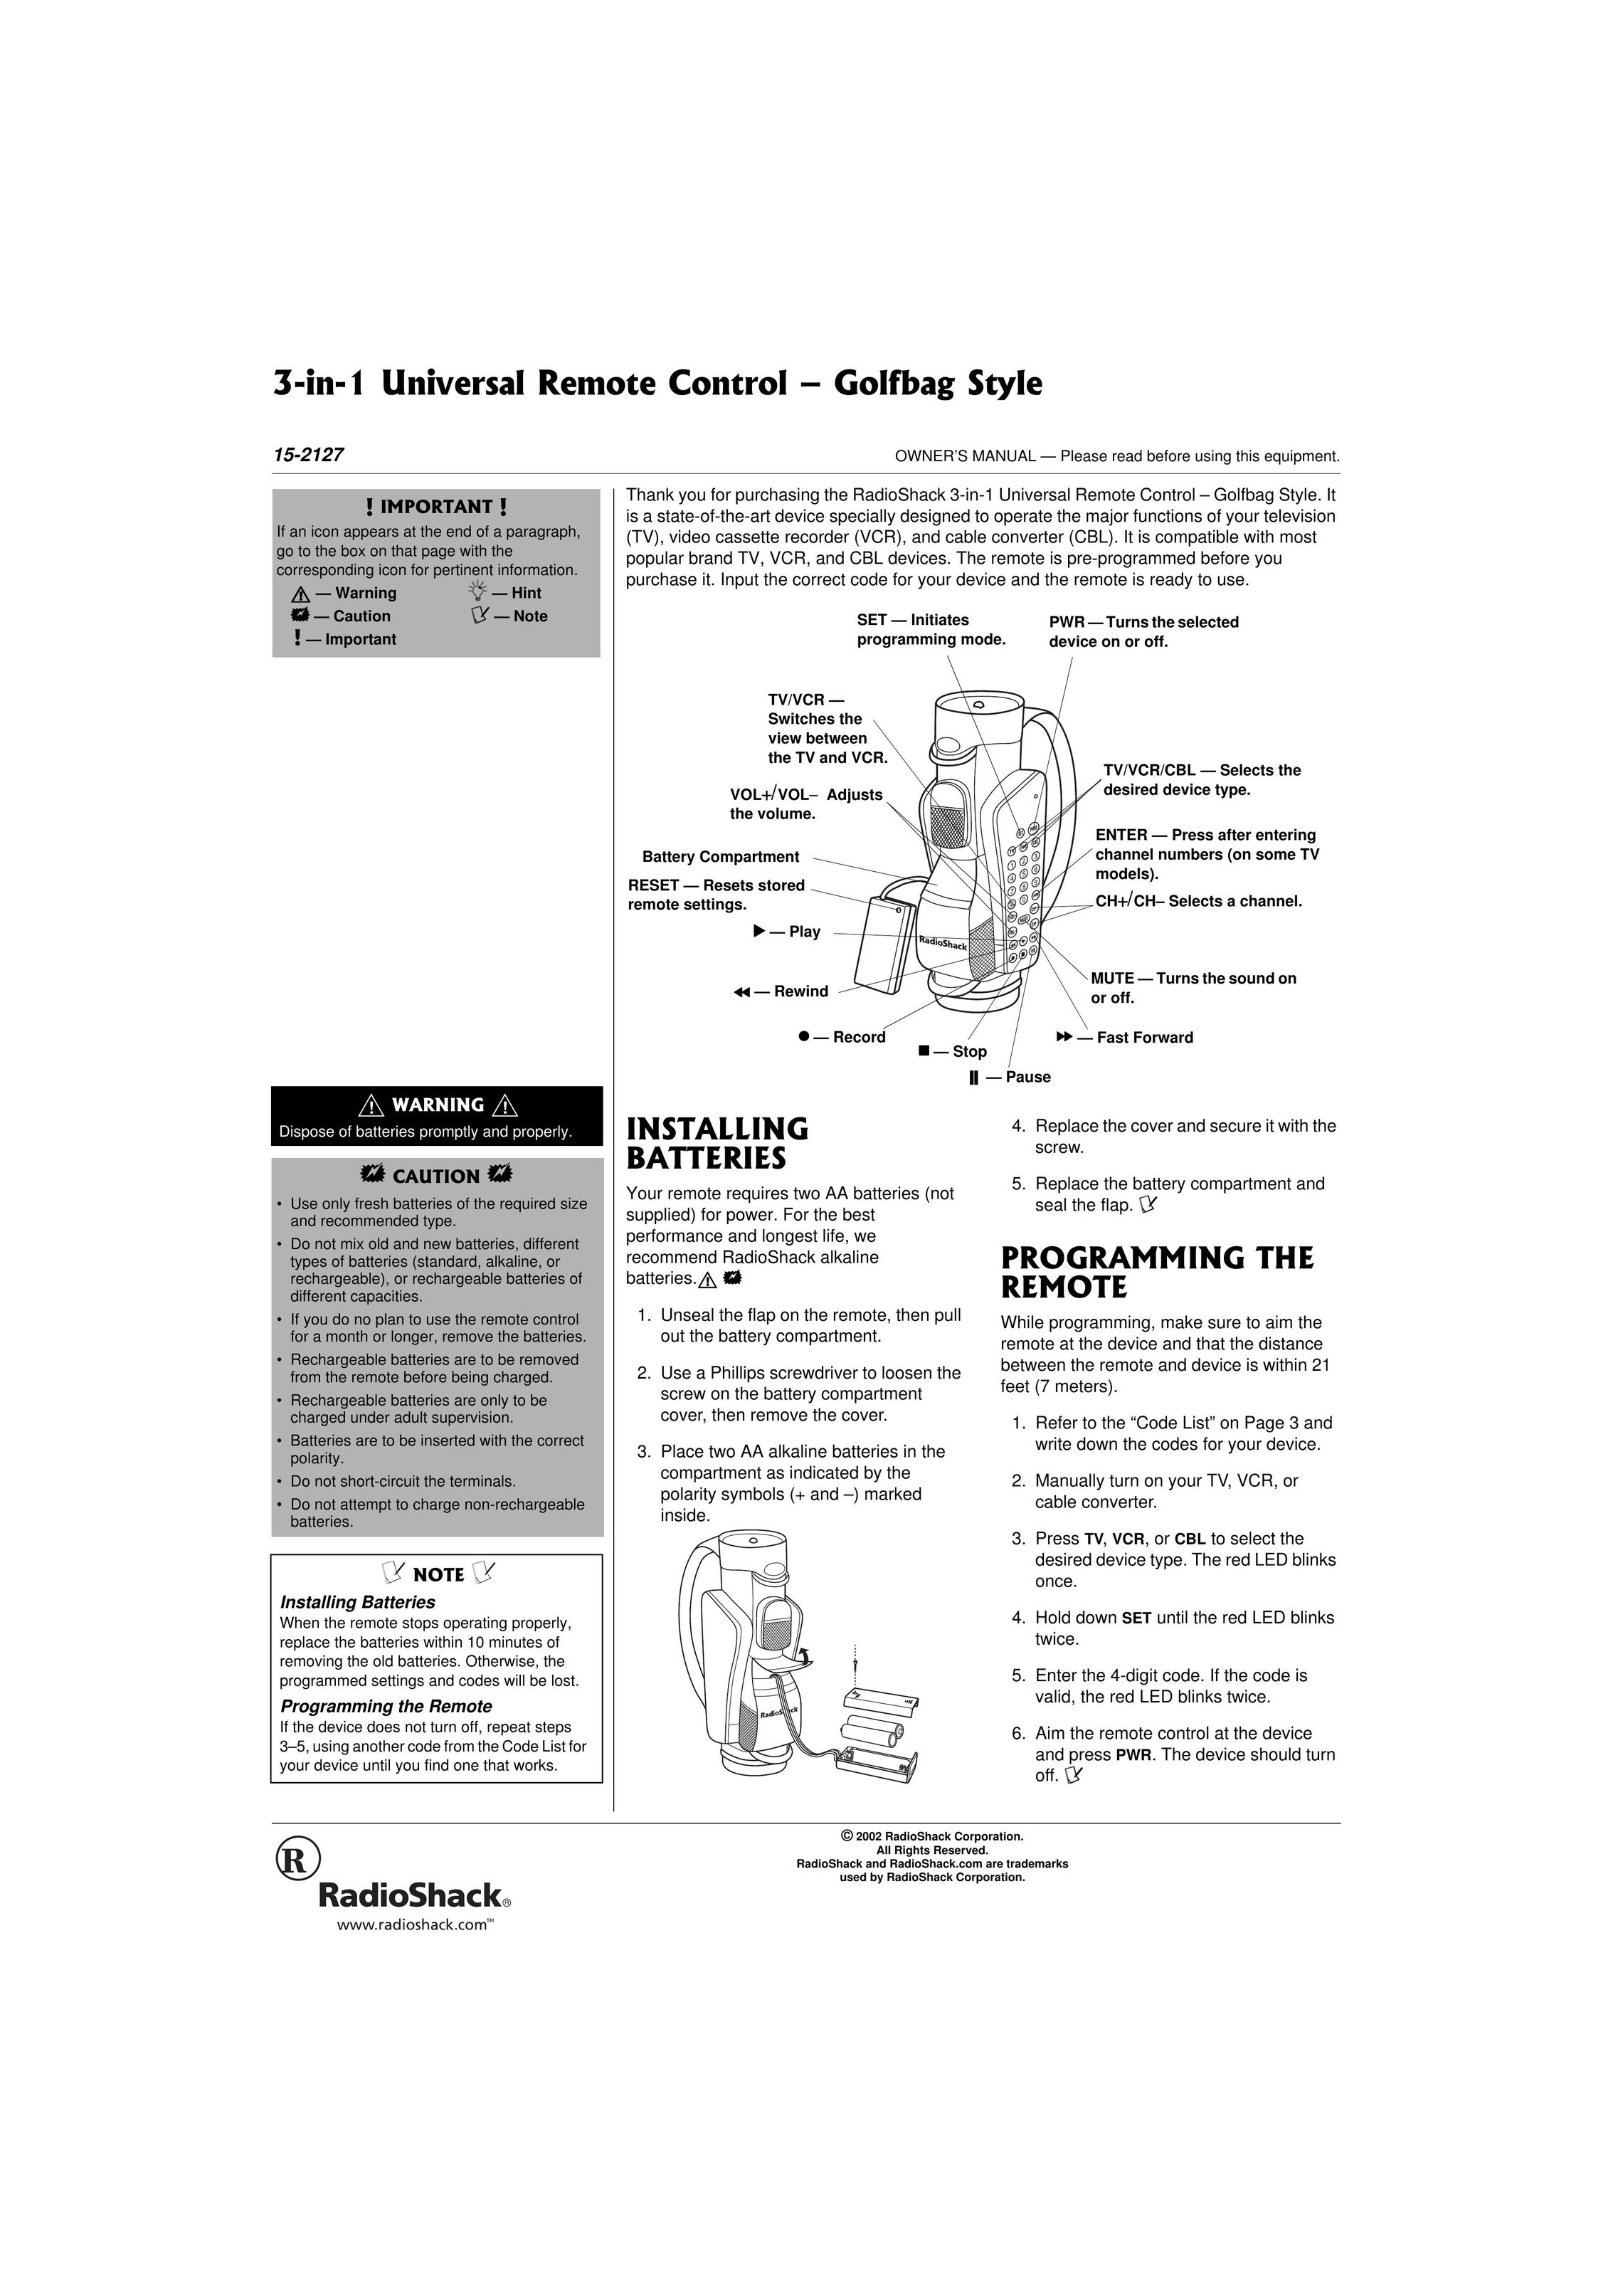 Radio Shack 15-2127 Universal Remote User Manual